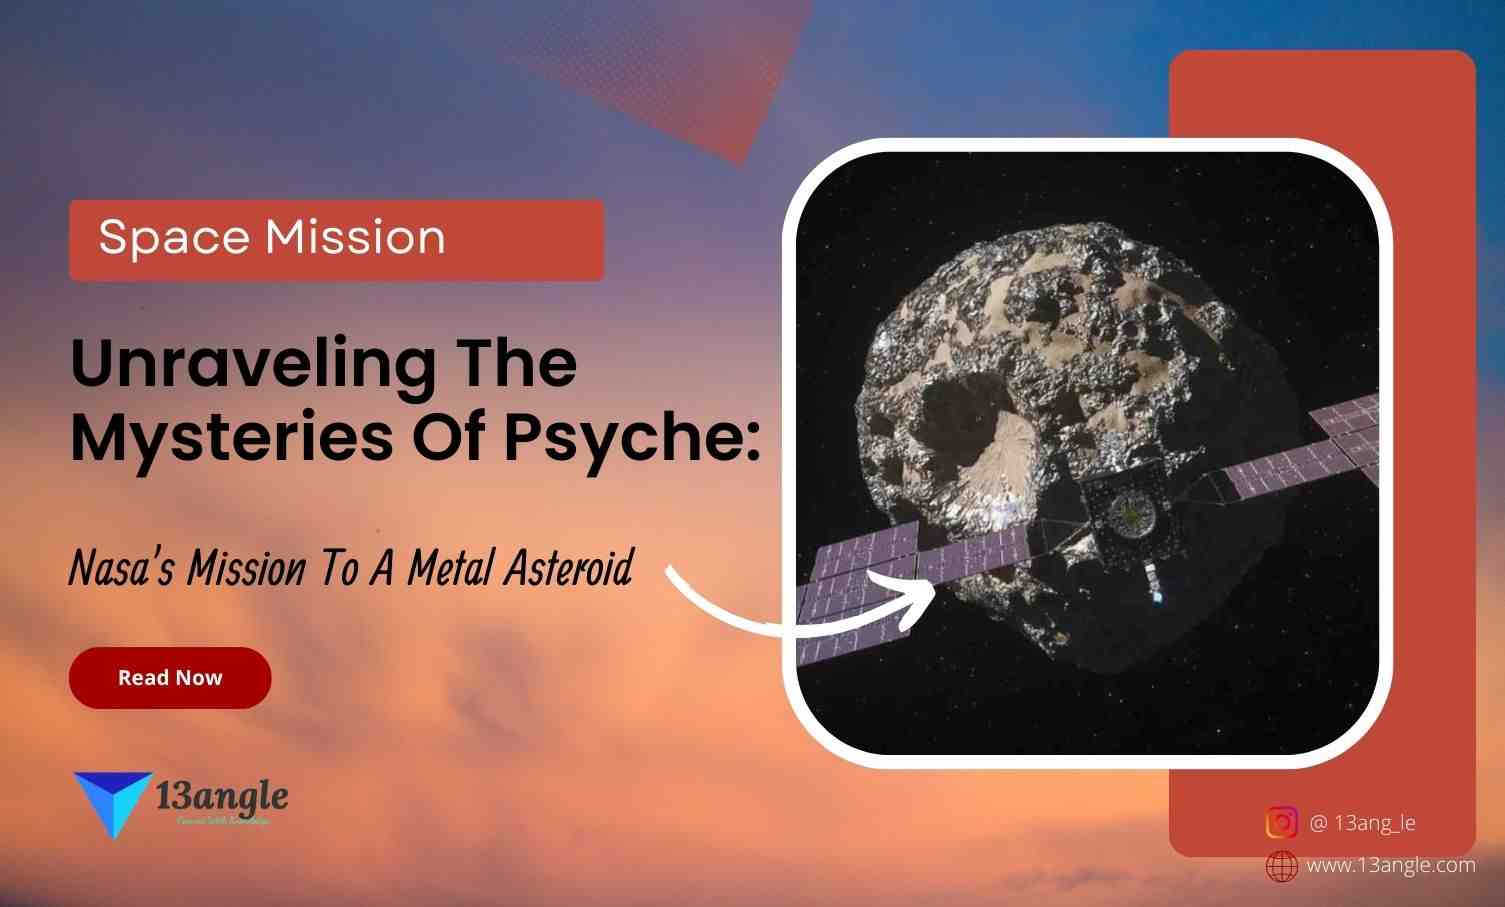 Nasa's Mission To A Metal Asteroid- 13angle.com